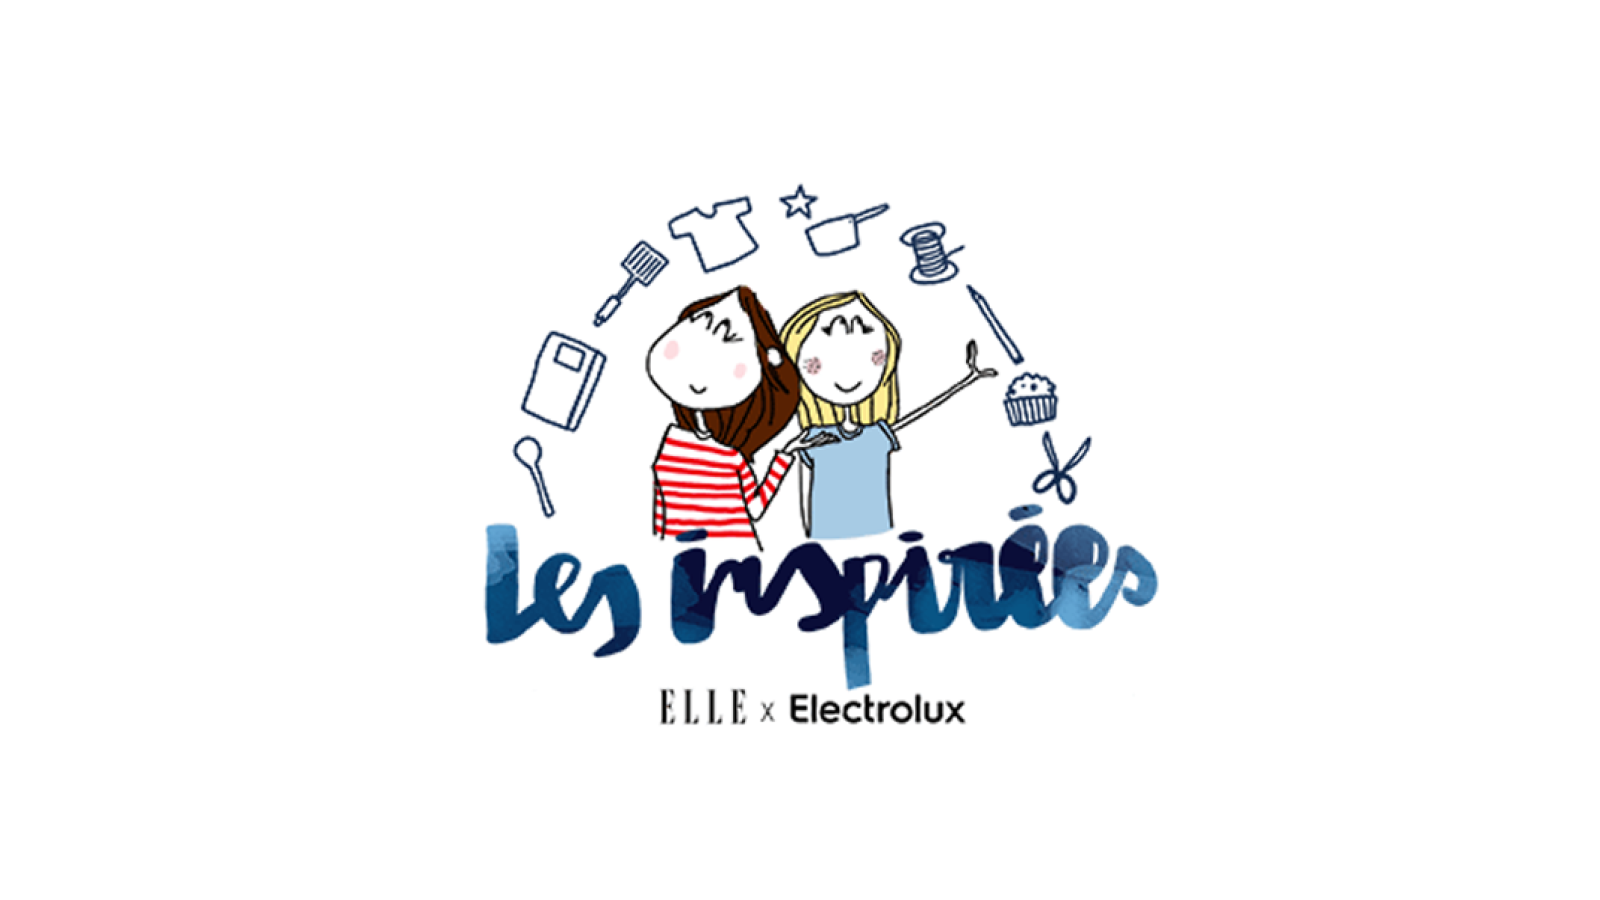 ELLE x Electrolux